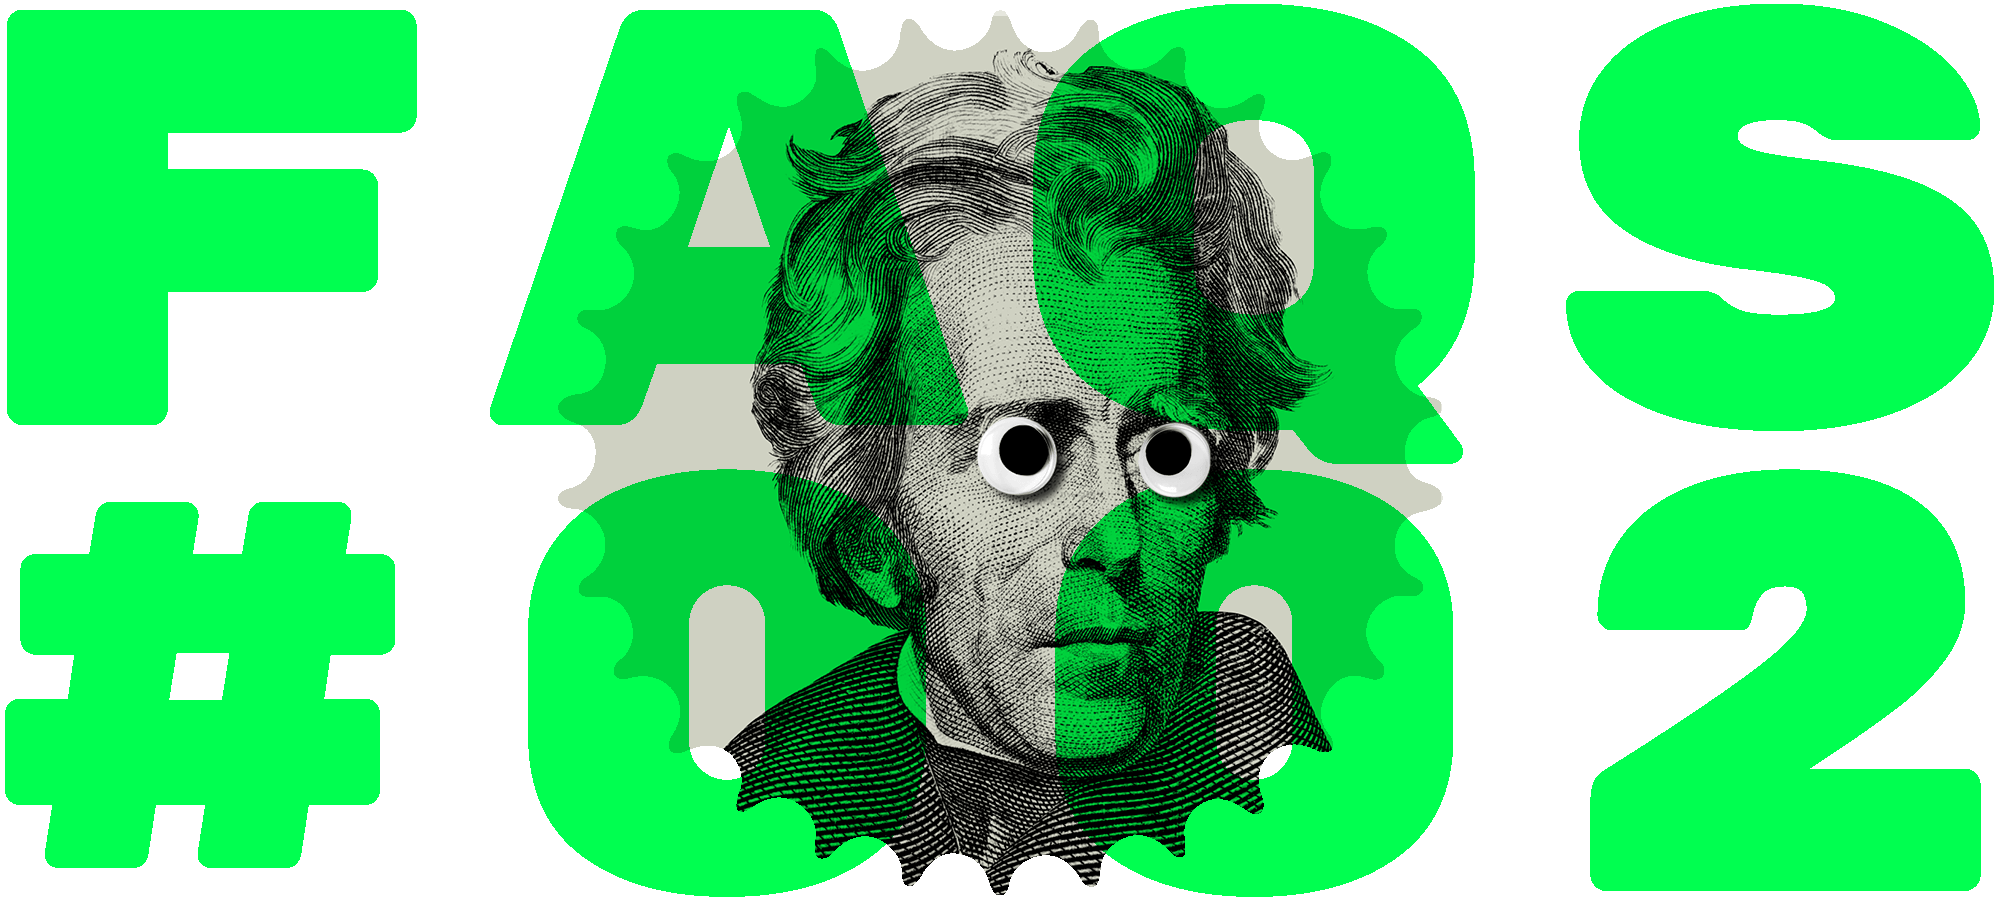 Header illustration - FAQS # 2 - Andrew Jackson looking confused